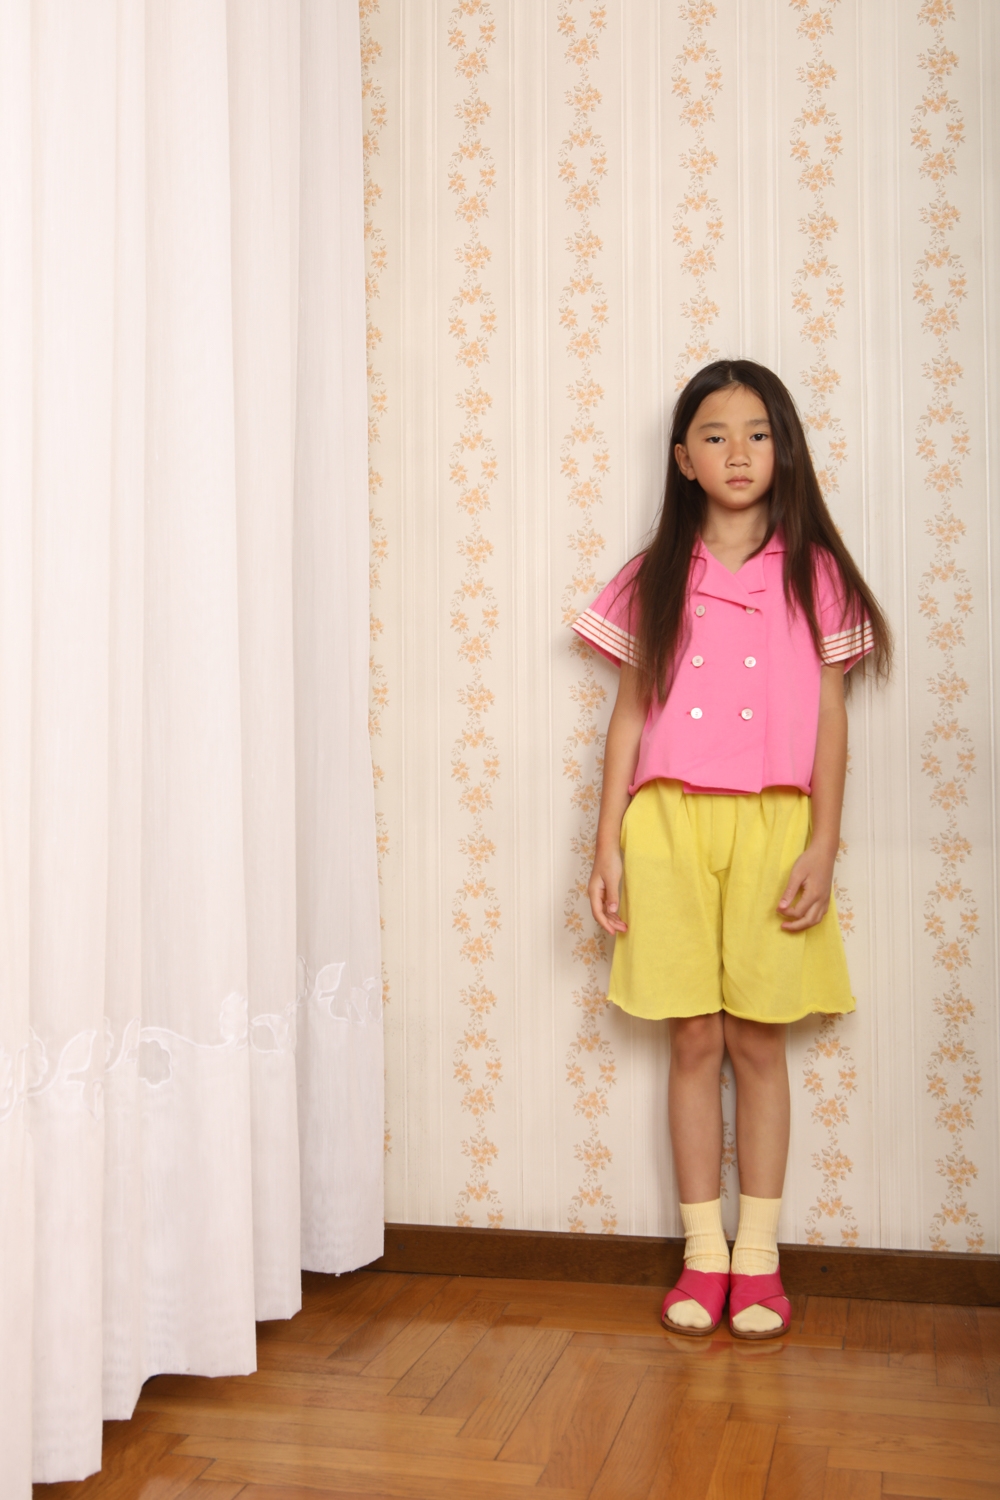 LIGNE NOIRE is a contemporary fashion label for kids